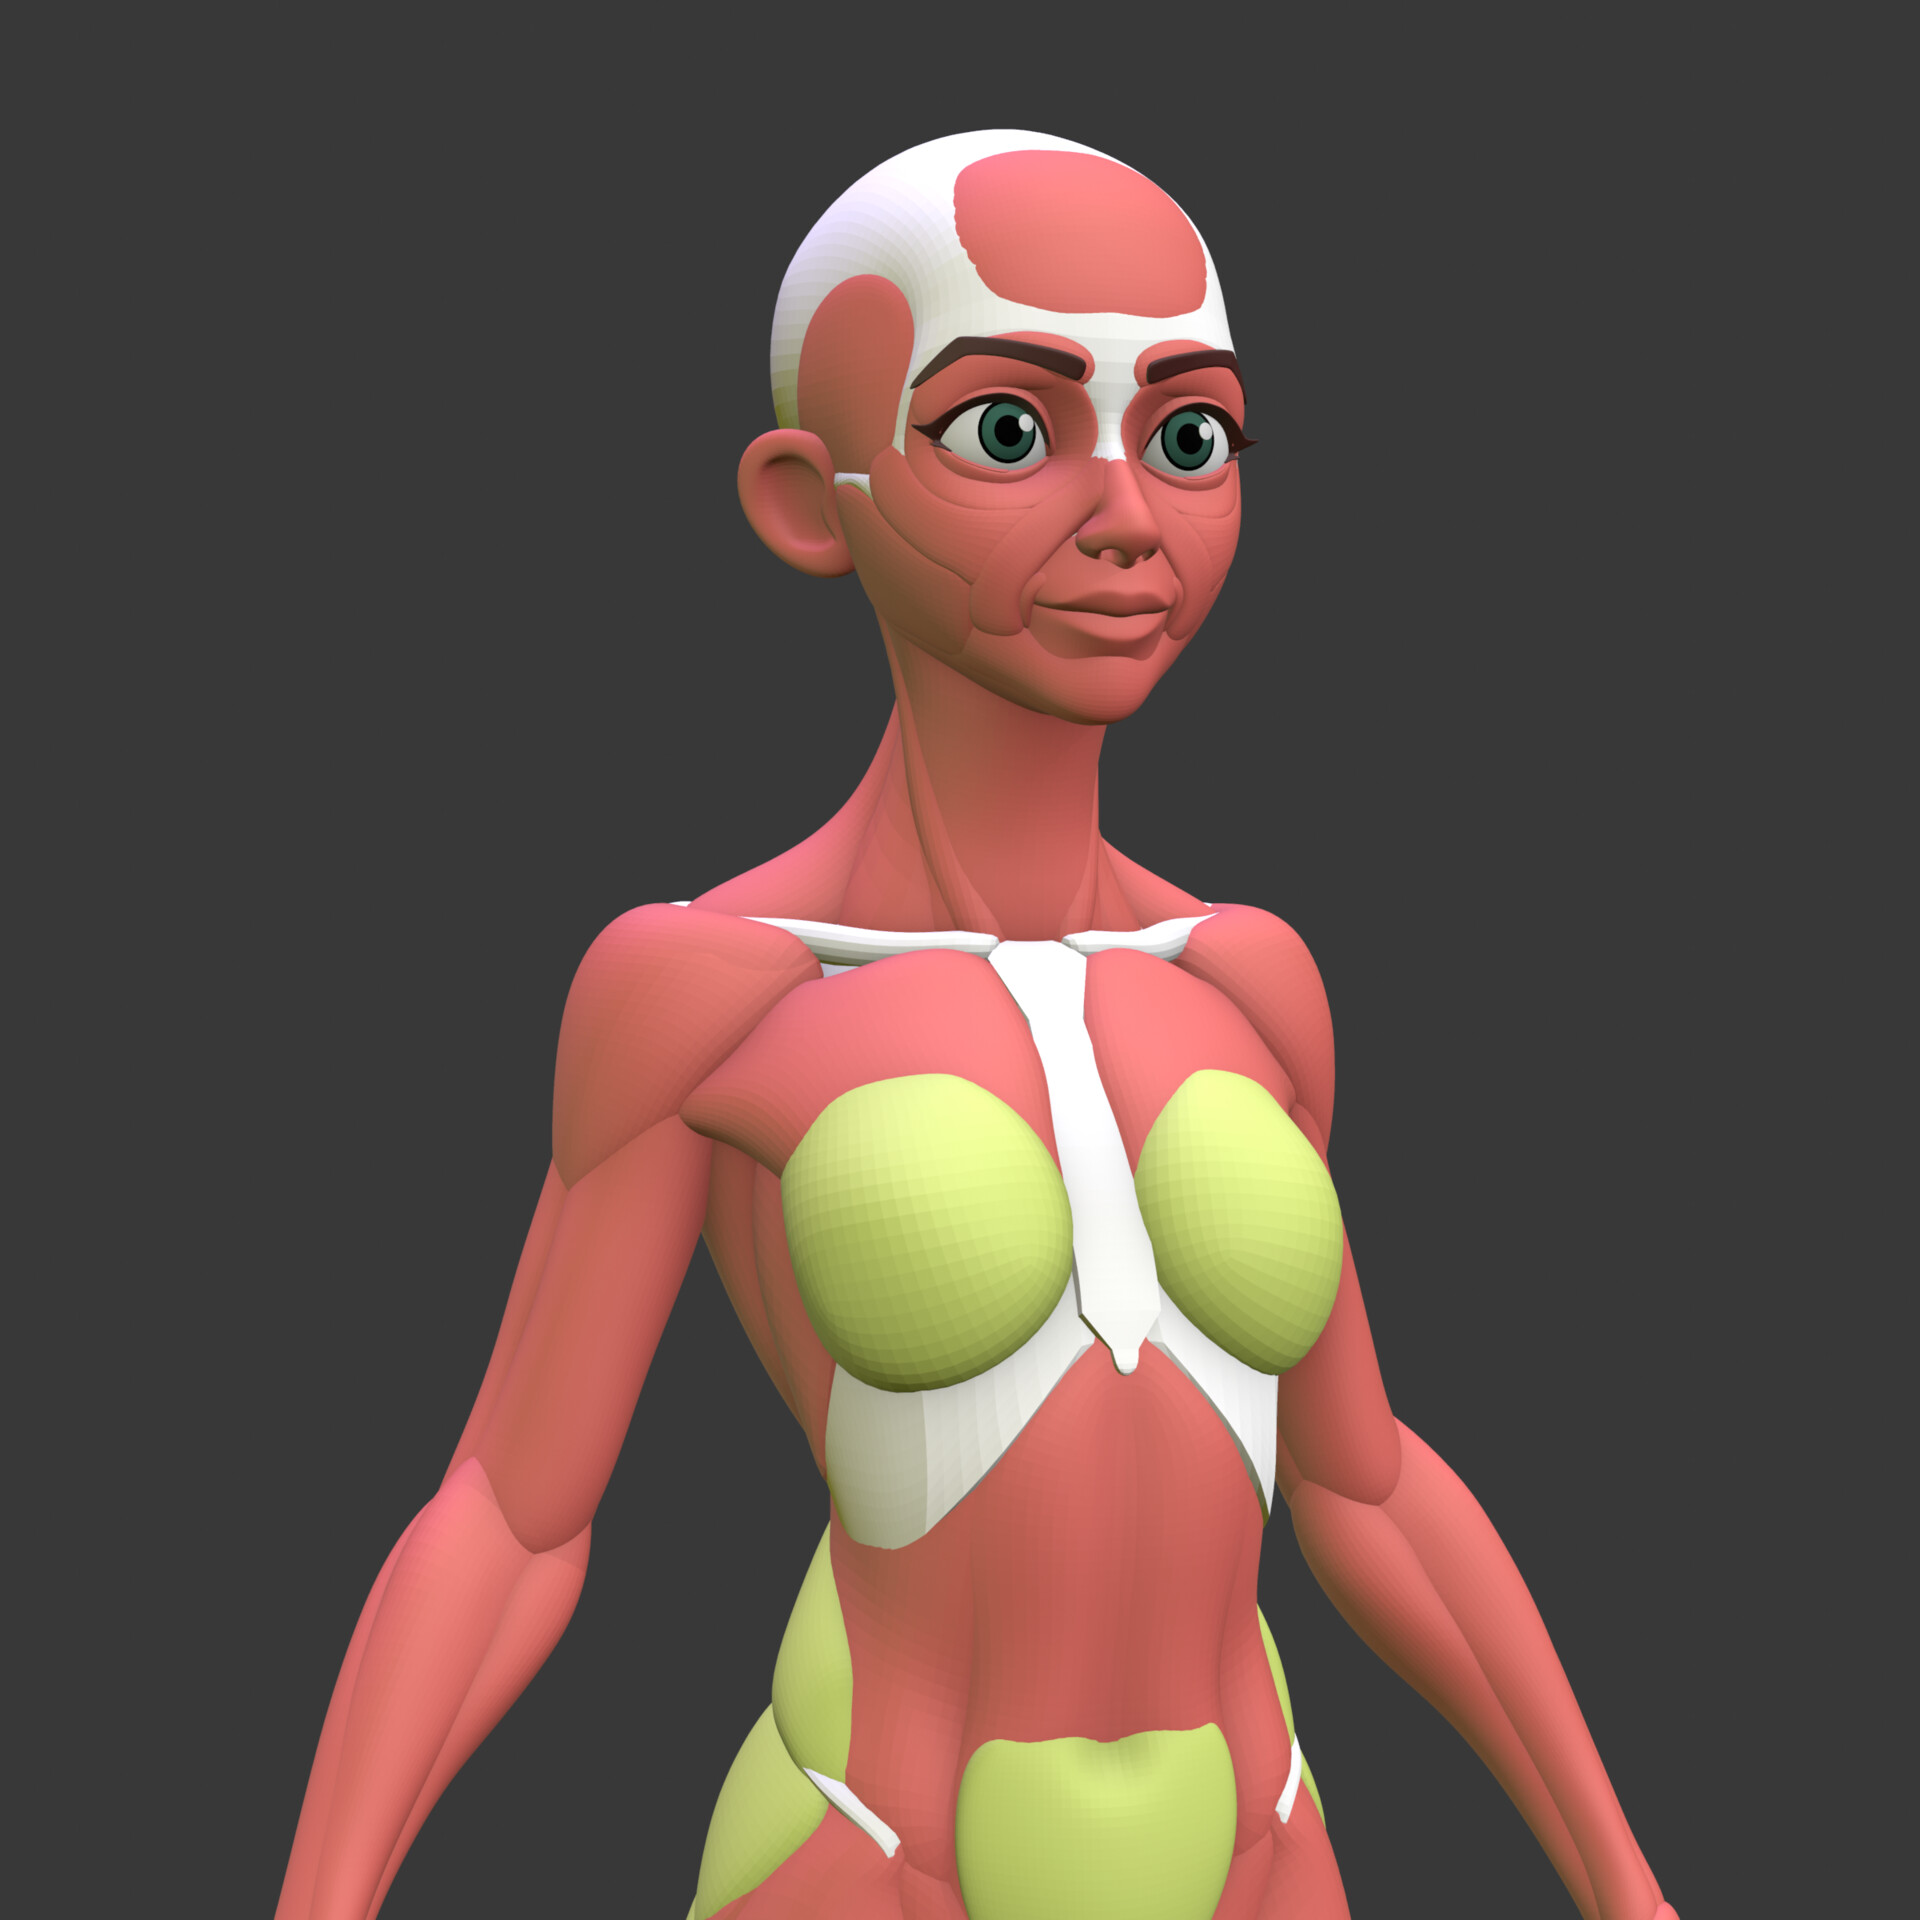 Female character anatomy practice - CG Cookie